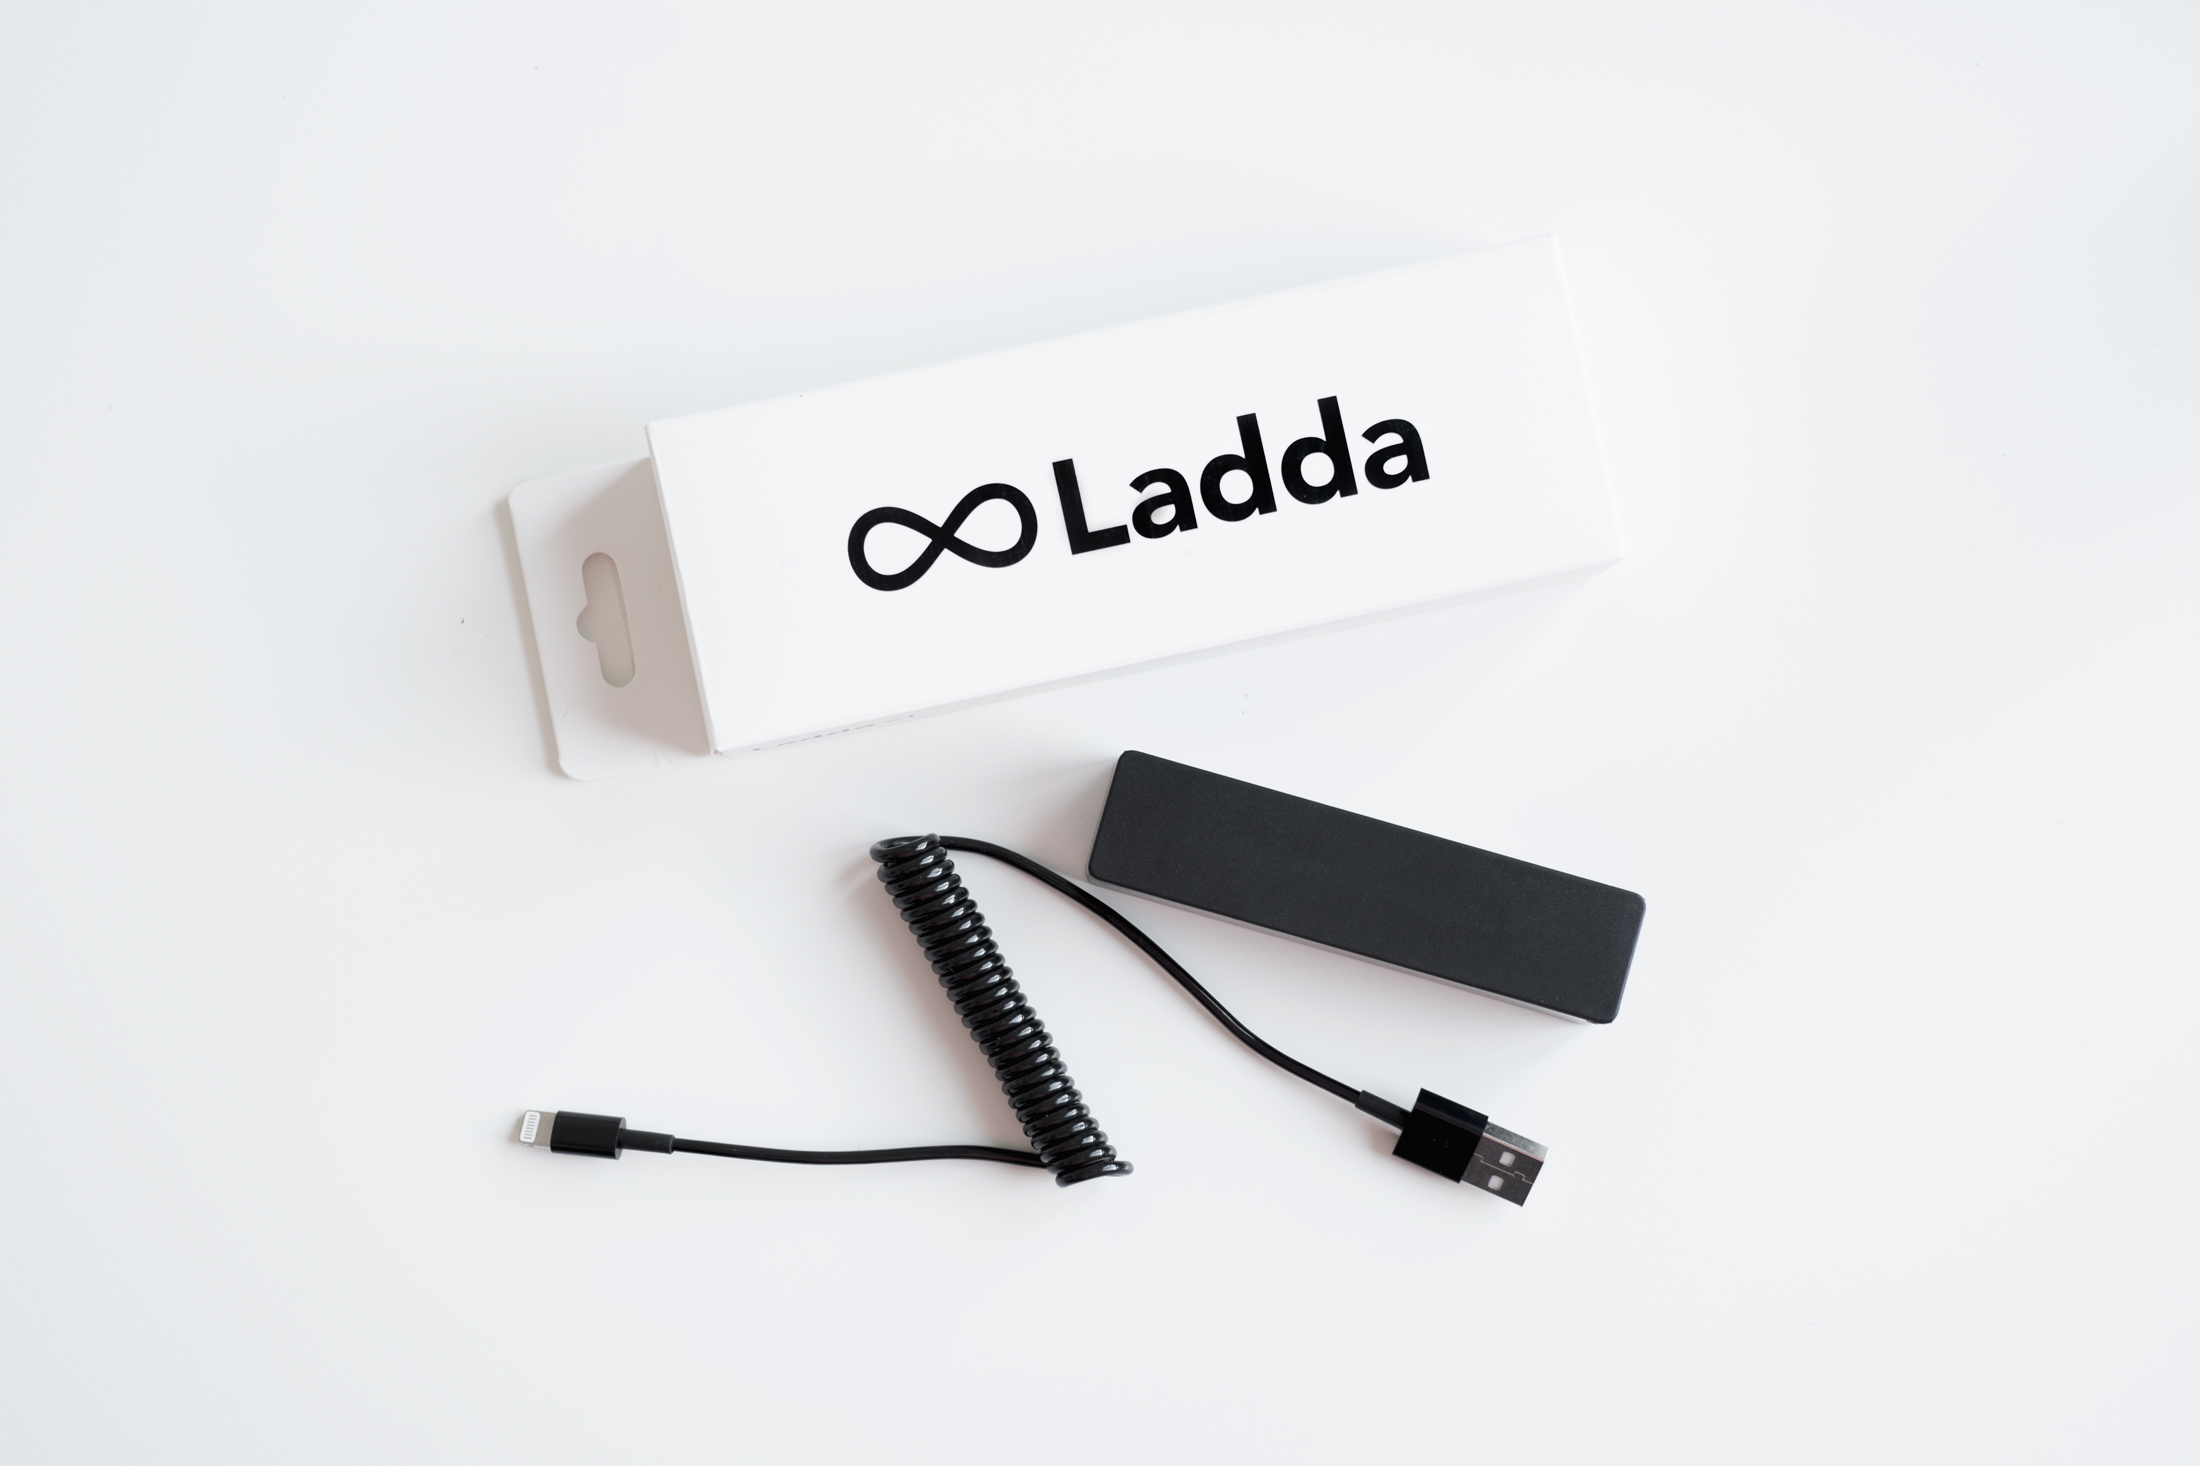 Phone-Ladda-box